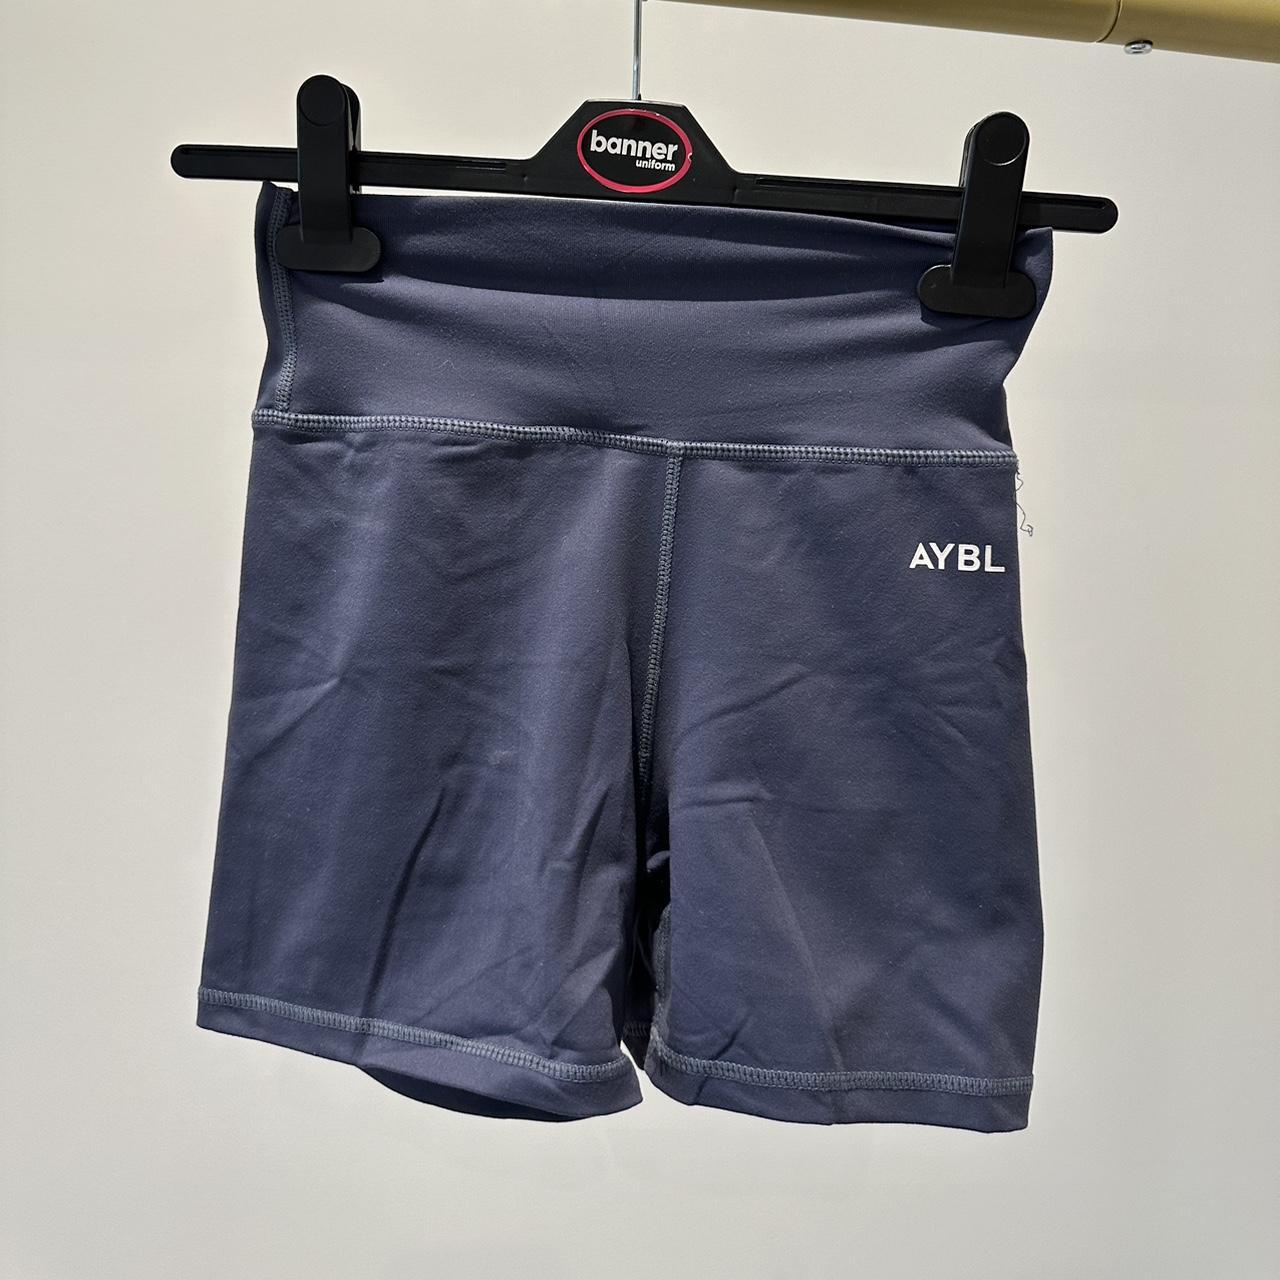 Brand new AYBL cycling gym shorts colour: ice blue - Depop